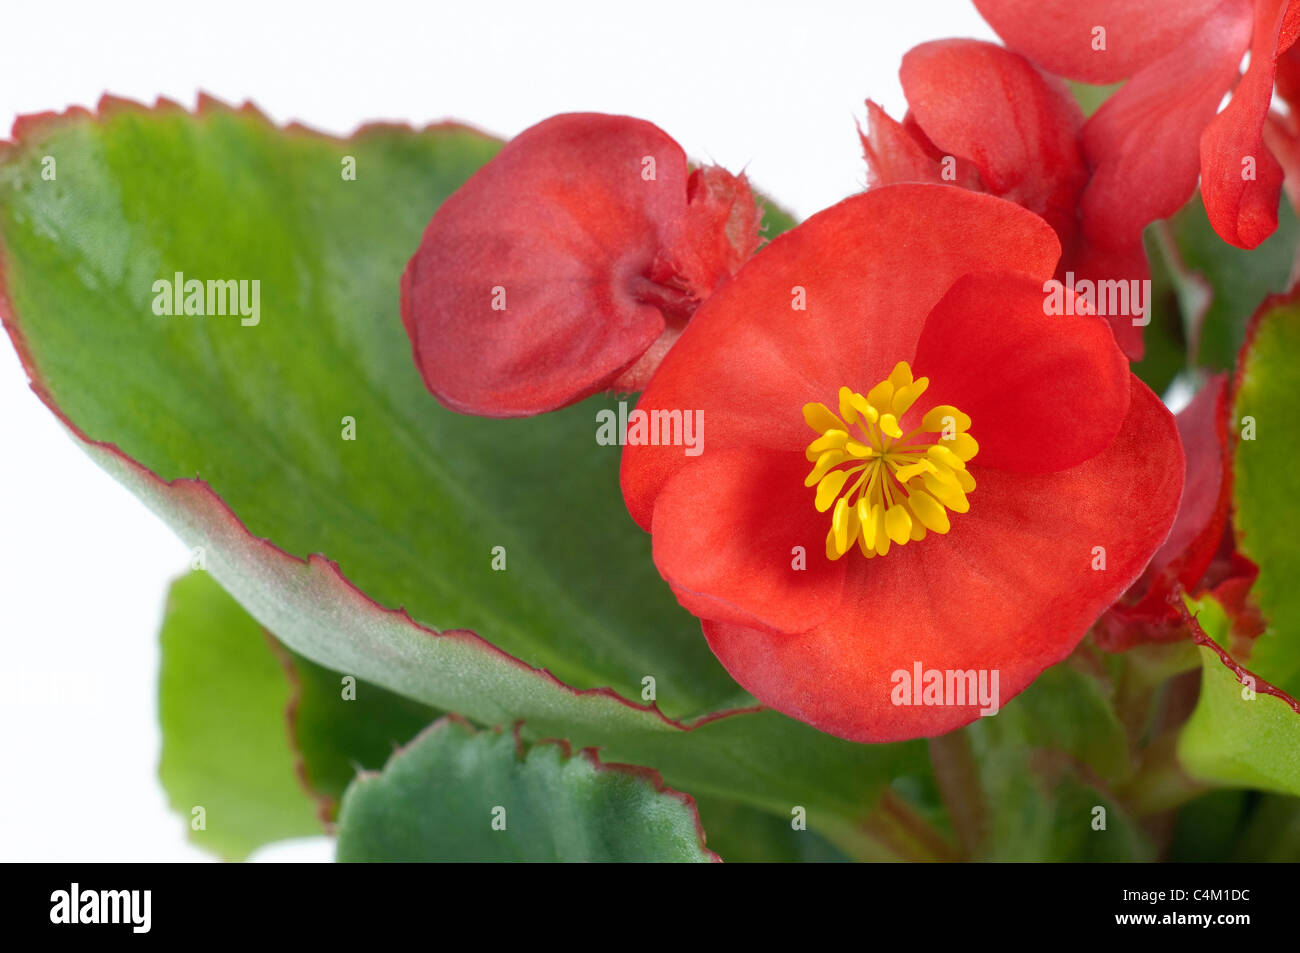 Wax Begonia, Wax-leaf Begonia (Begonia x semperfloren-cultorum), red flowering plant. Studio picture against a white background Stock Photo